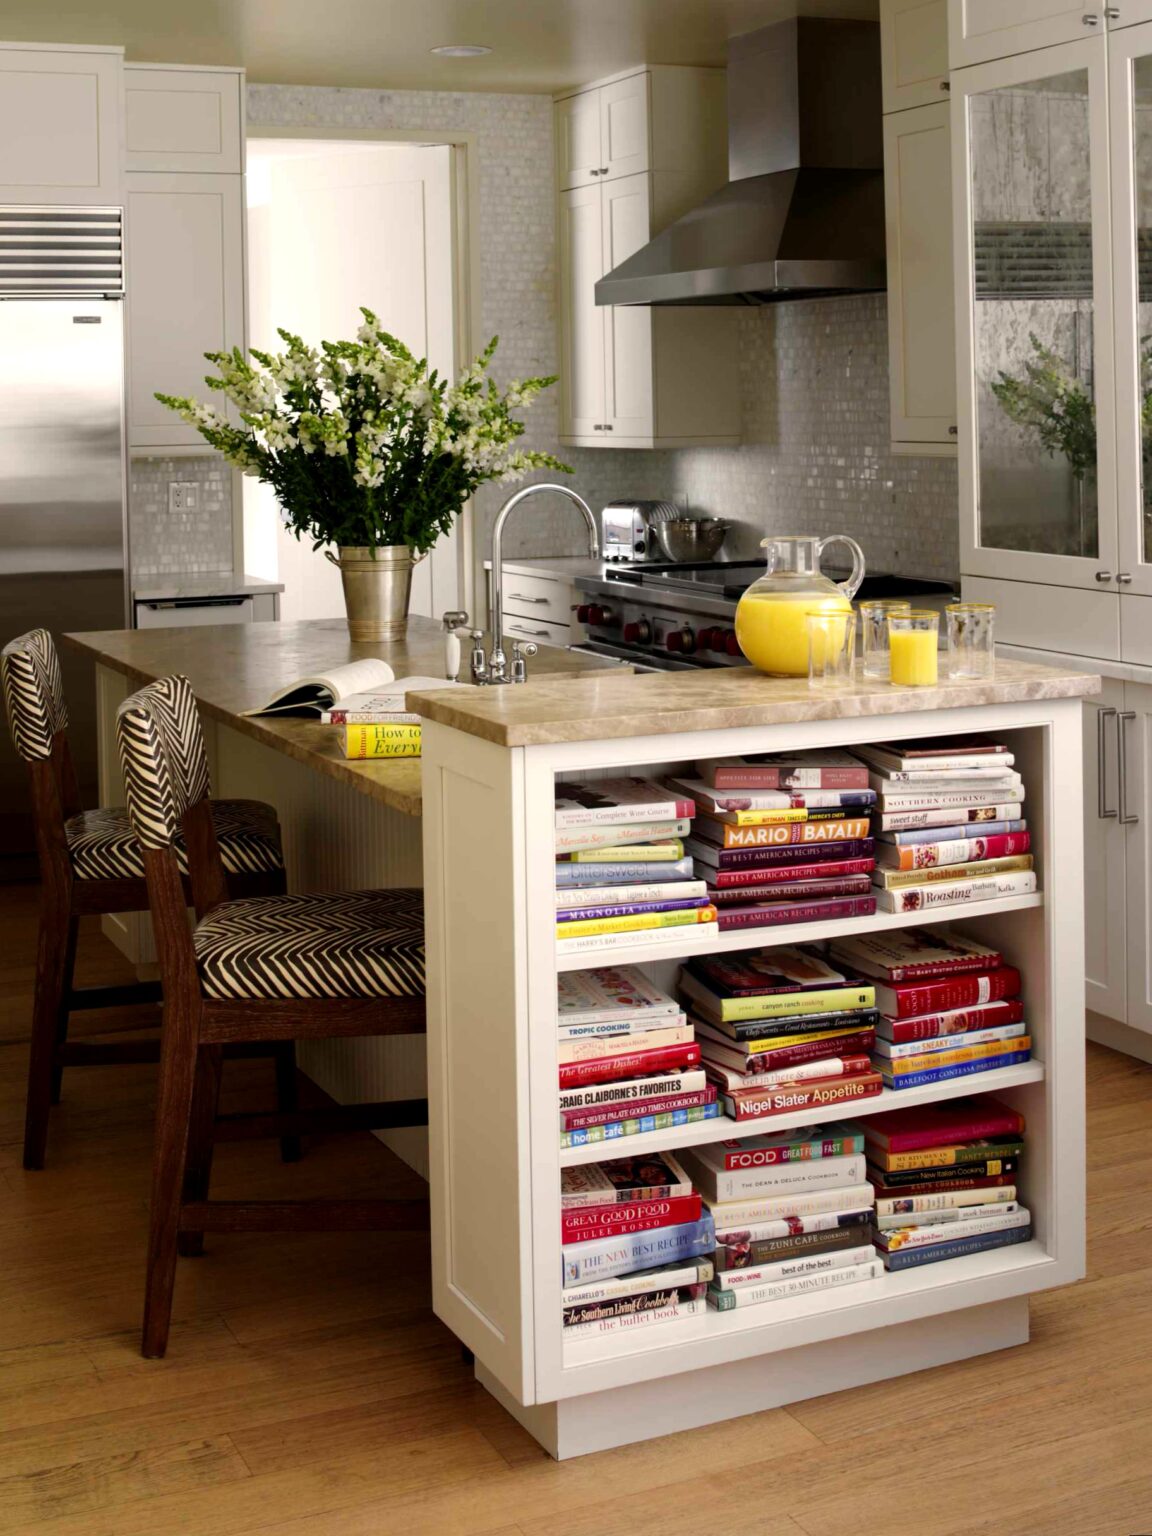 27 Kitchen Solution Bookshelf Organization Homebnc 1152x1536 